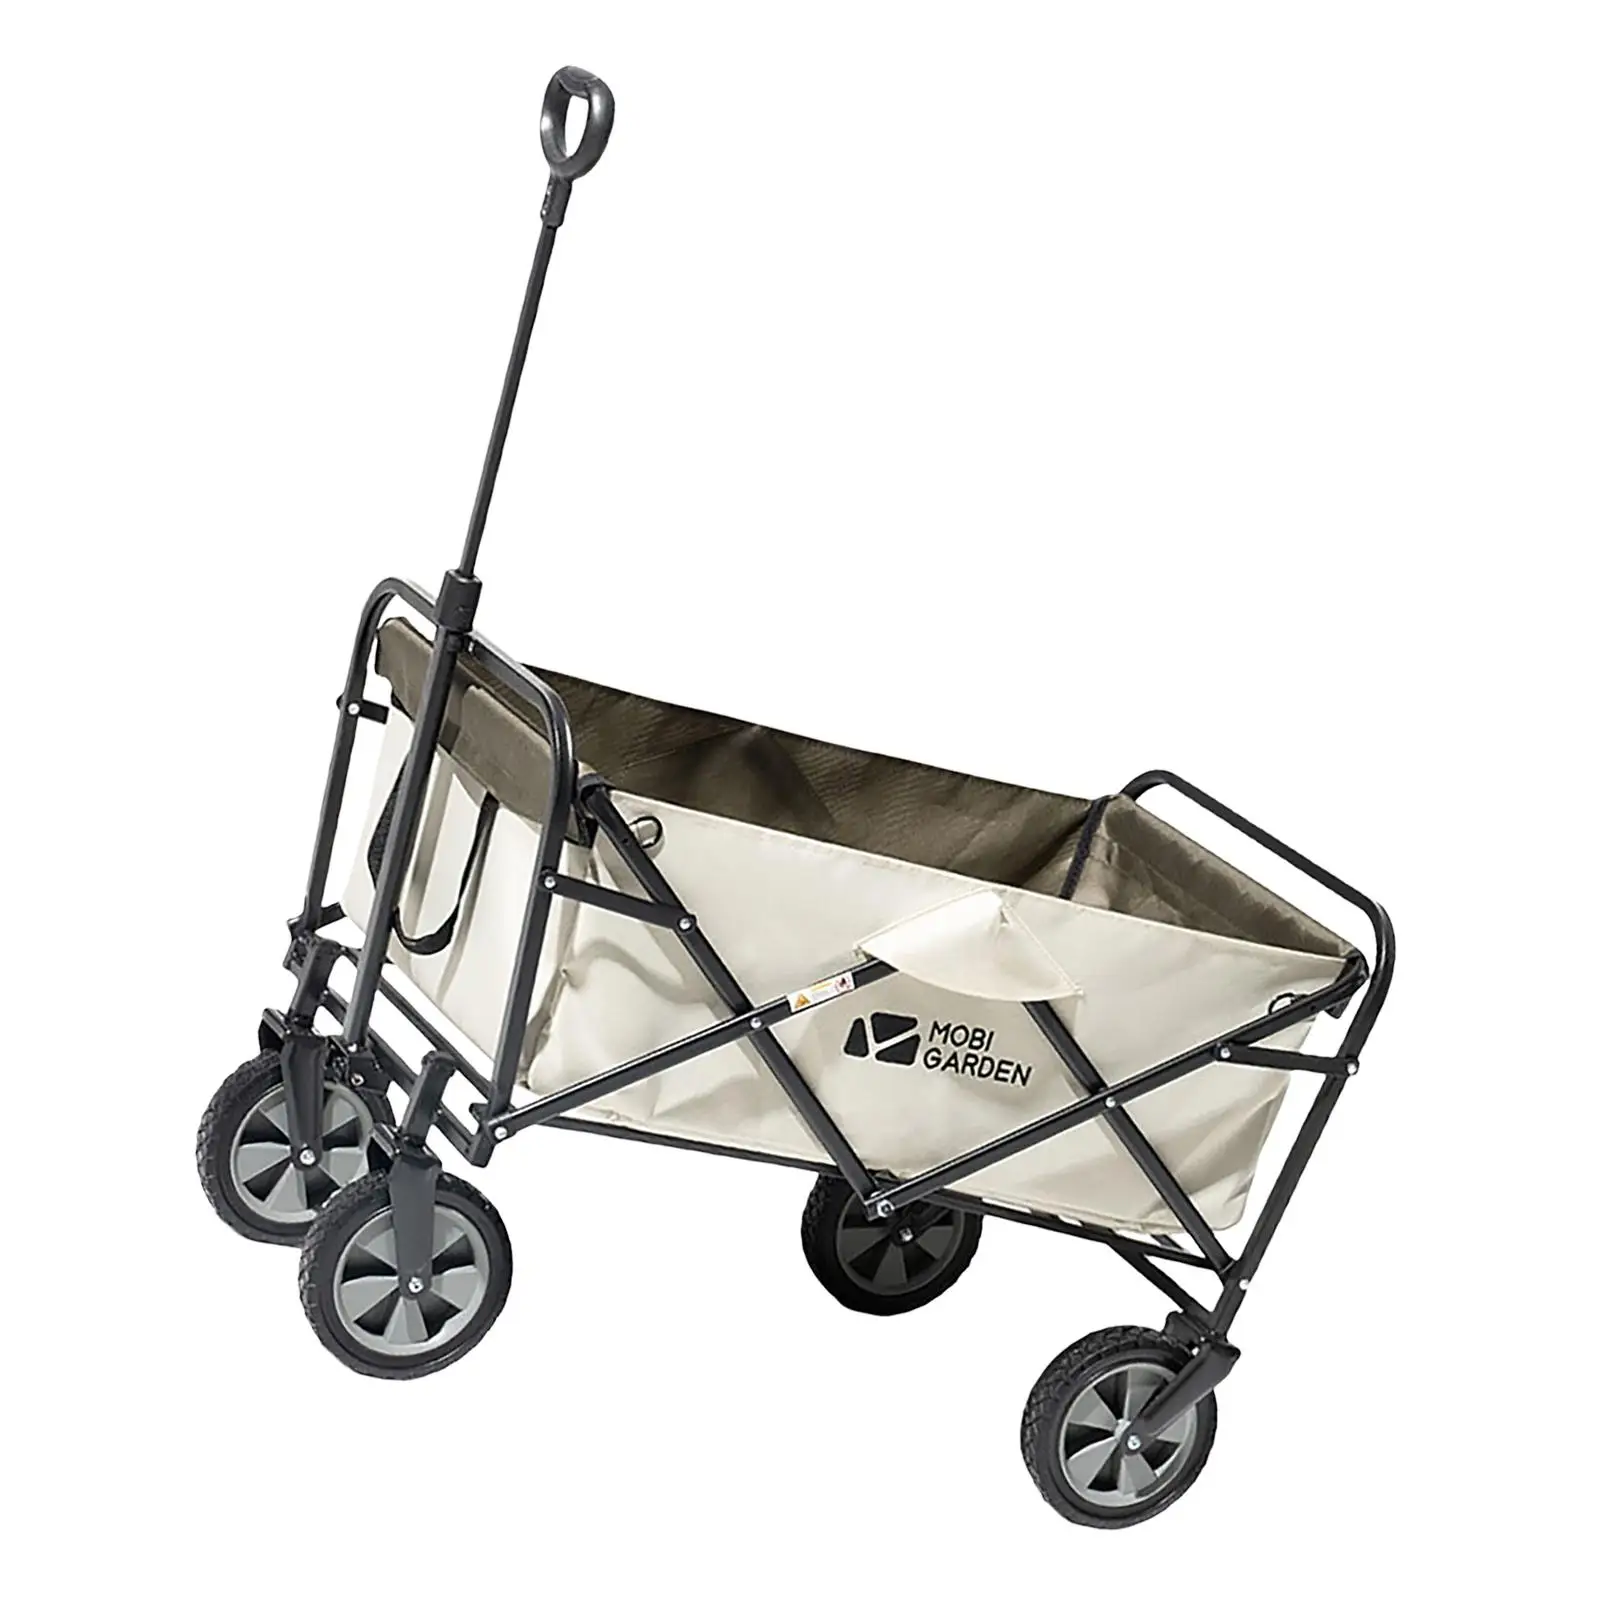 Portable folding trolley utility truck shopping cart trolley garden trolley four-wheel tool cart